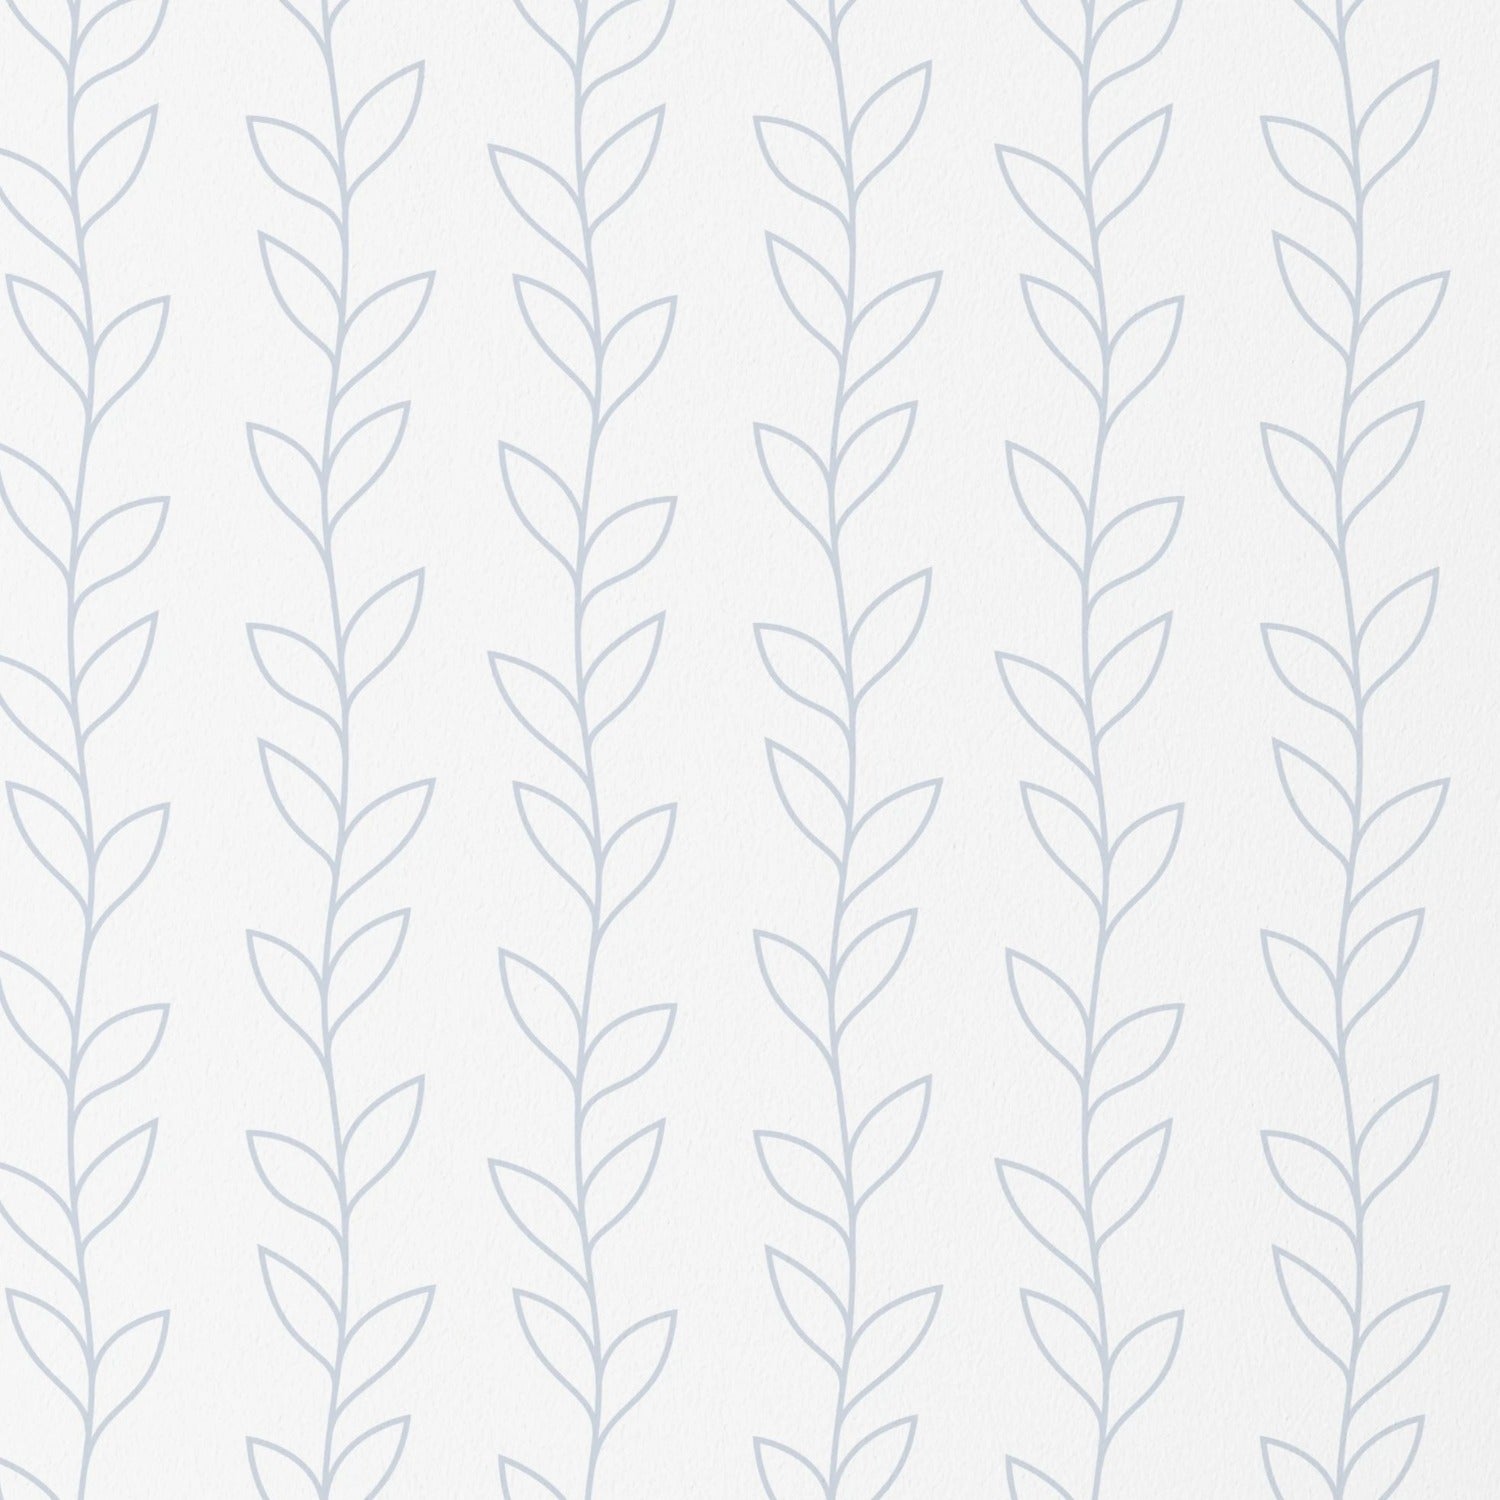 Close-up of Neutral Natural Wallpaper with Subtle Leaf Designs